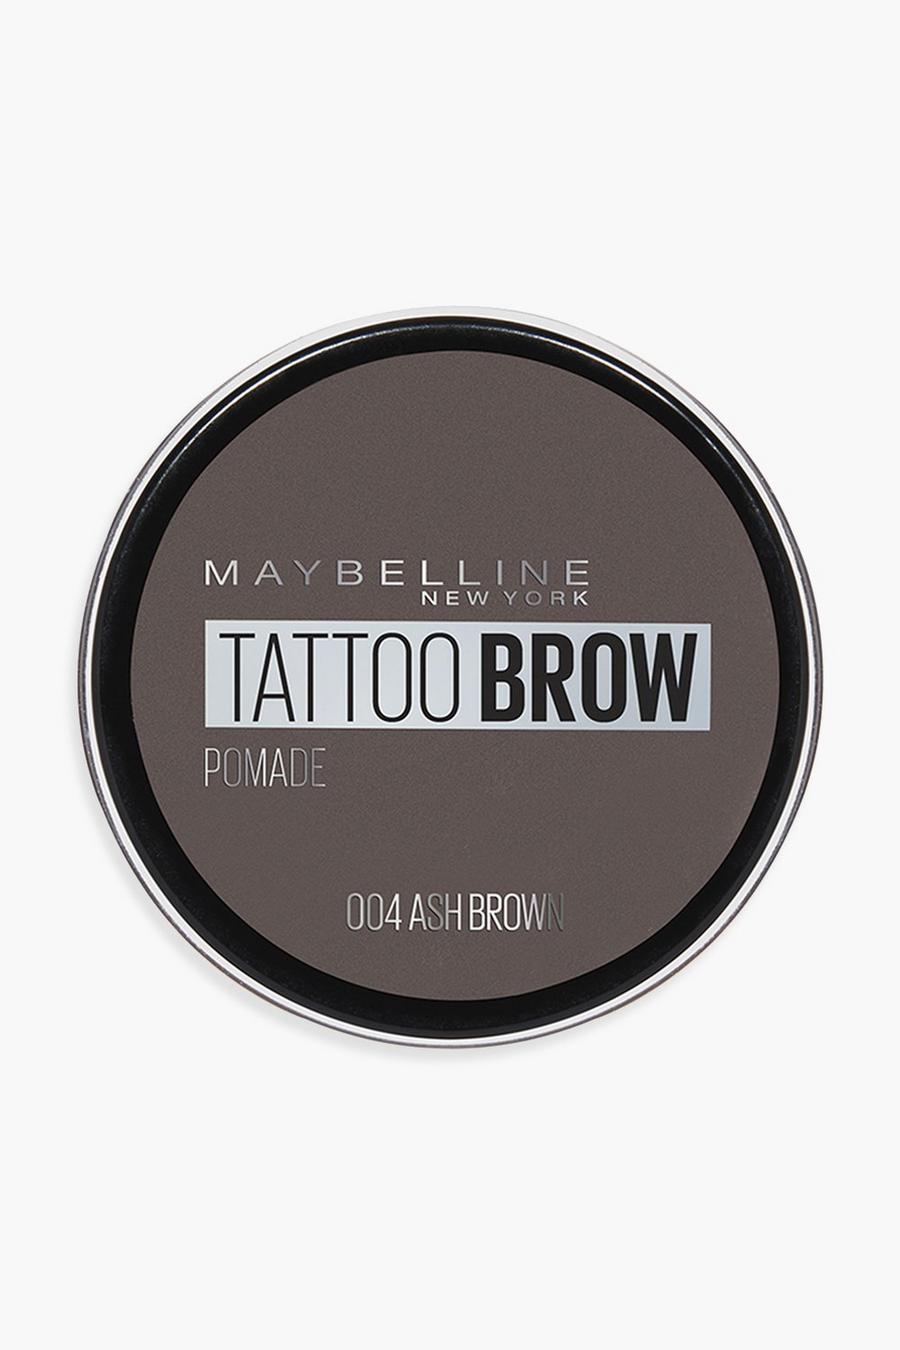 Crema tatuaje para cejas de Maybelline, 04 ash brown image number 1